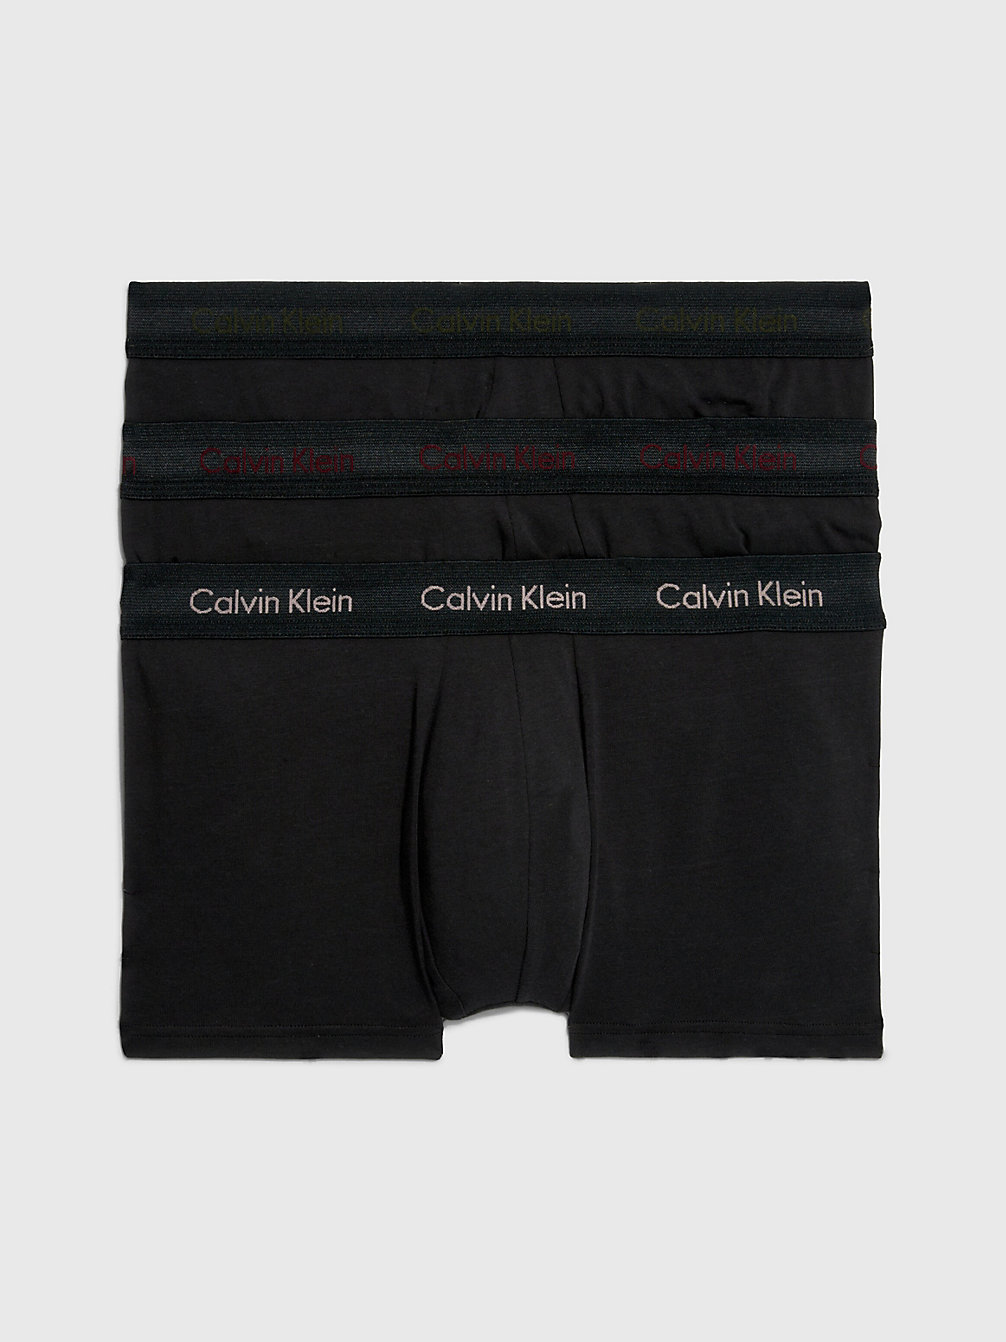 B-WOODROSE, FLD OLV, DEEP ROUGE LG 3er-Pack Hüft-Shorts - Cotton Stretch undefined Herren Calvin Klein